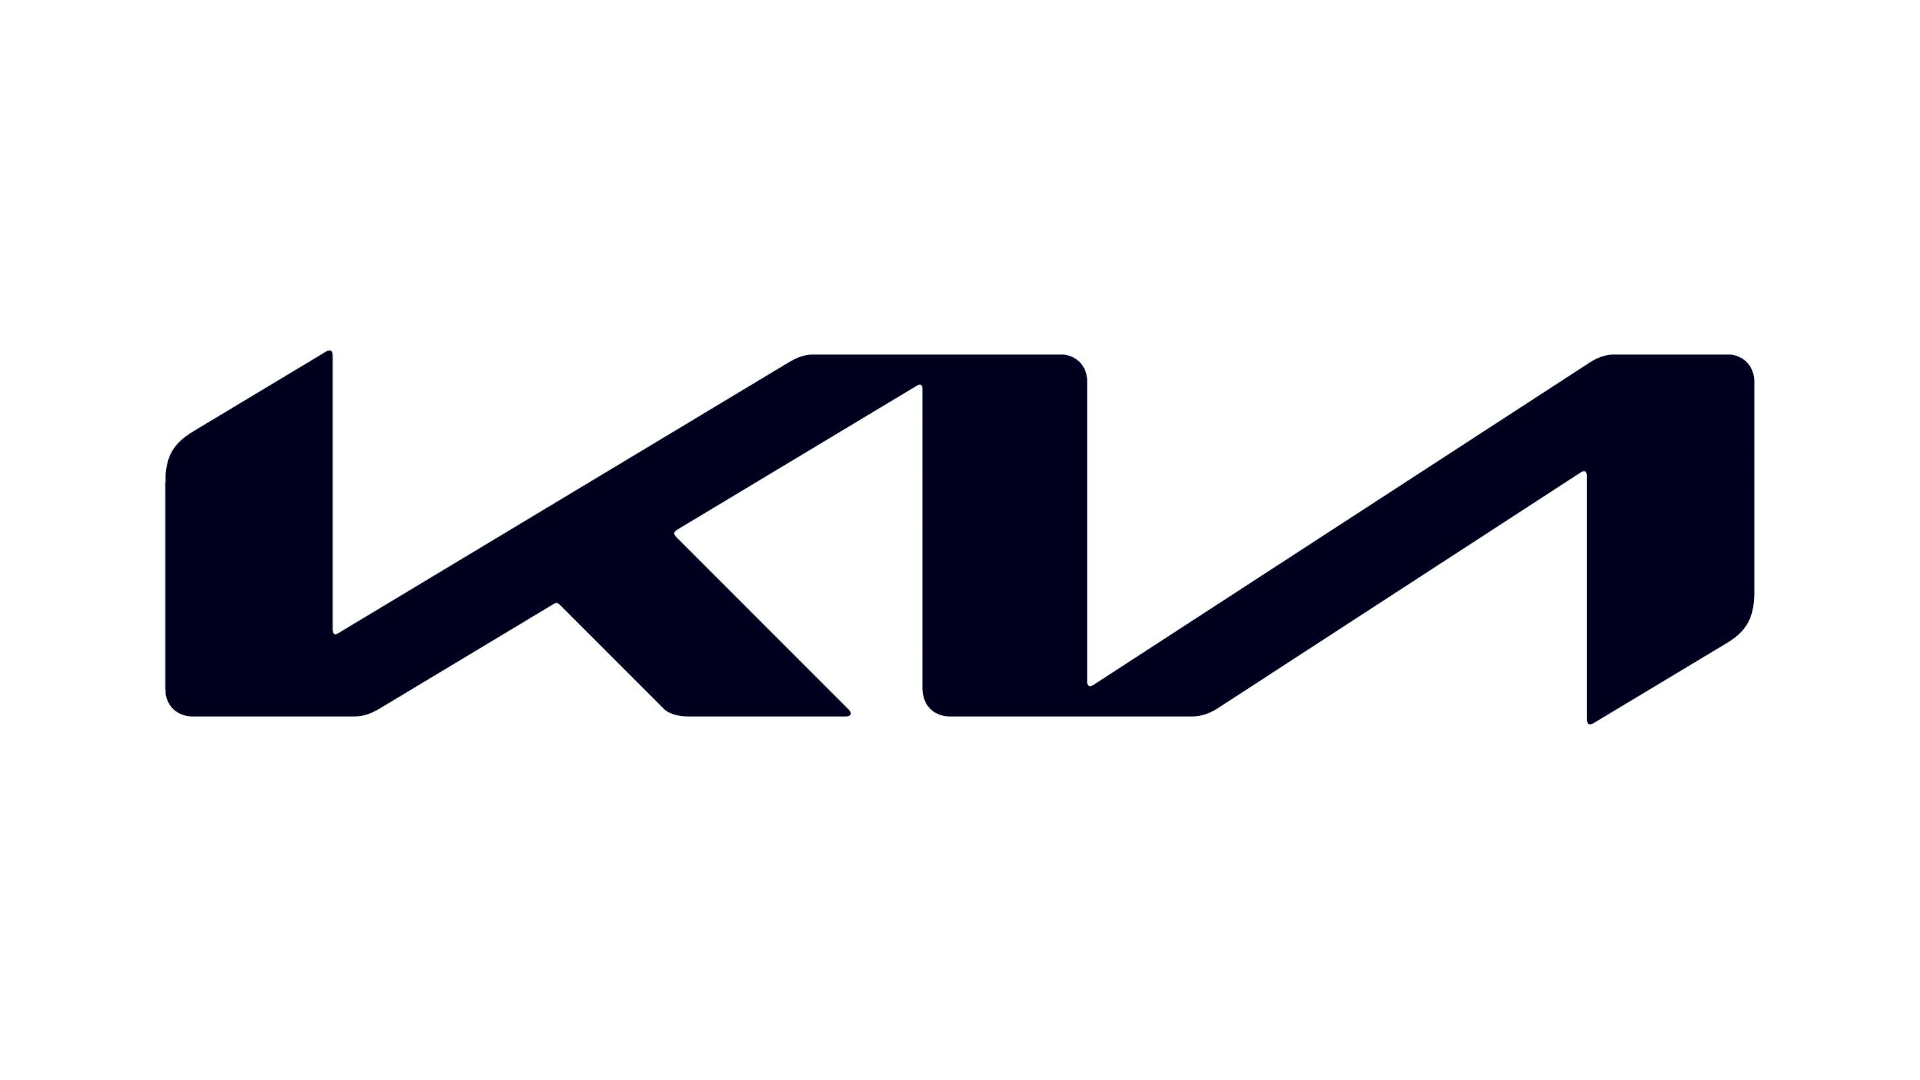 Kia’s new logo